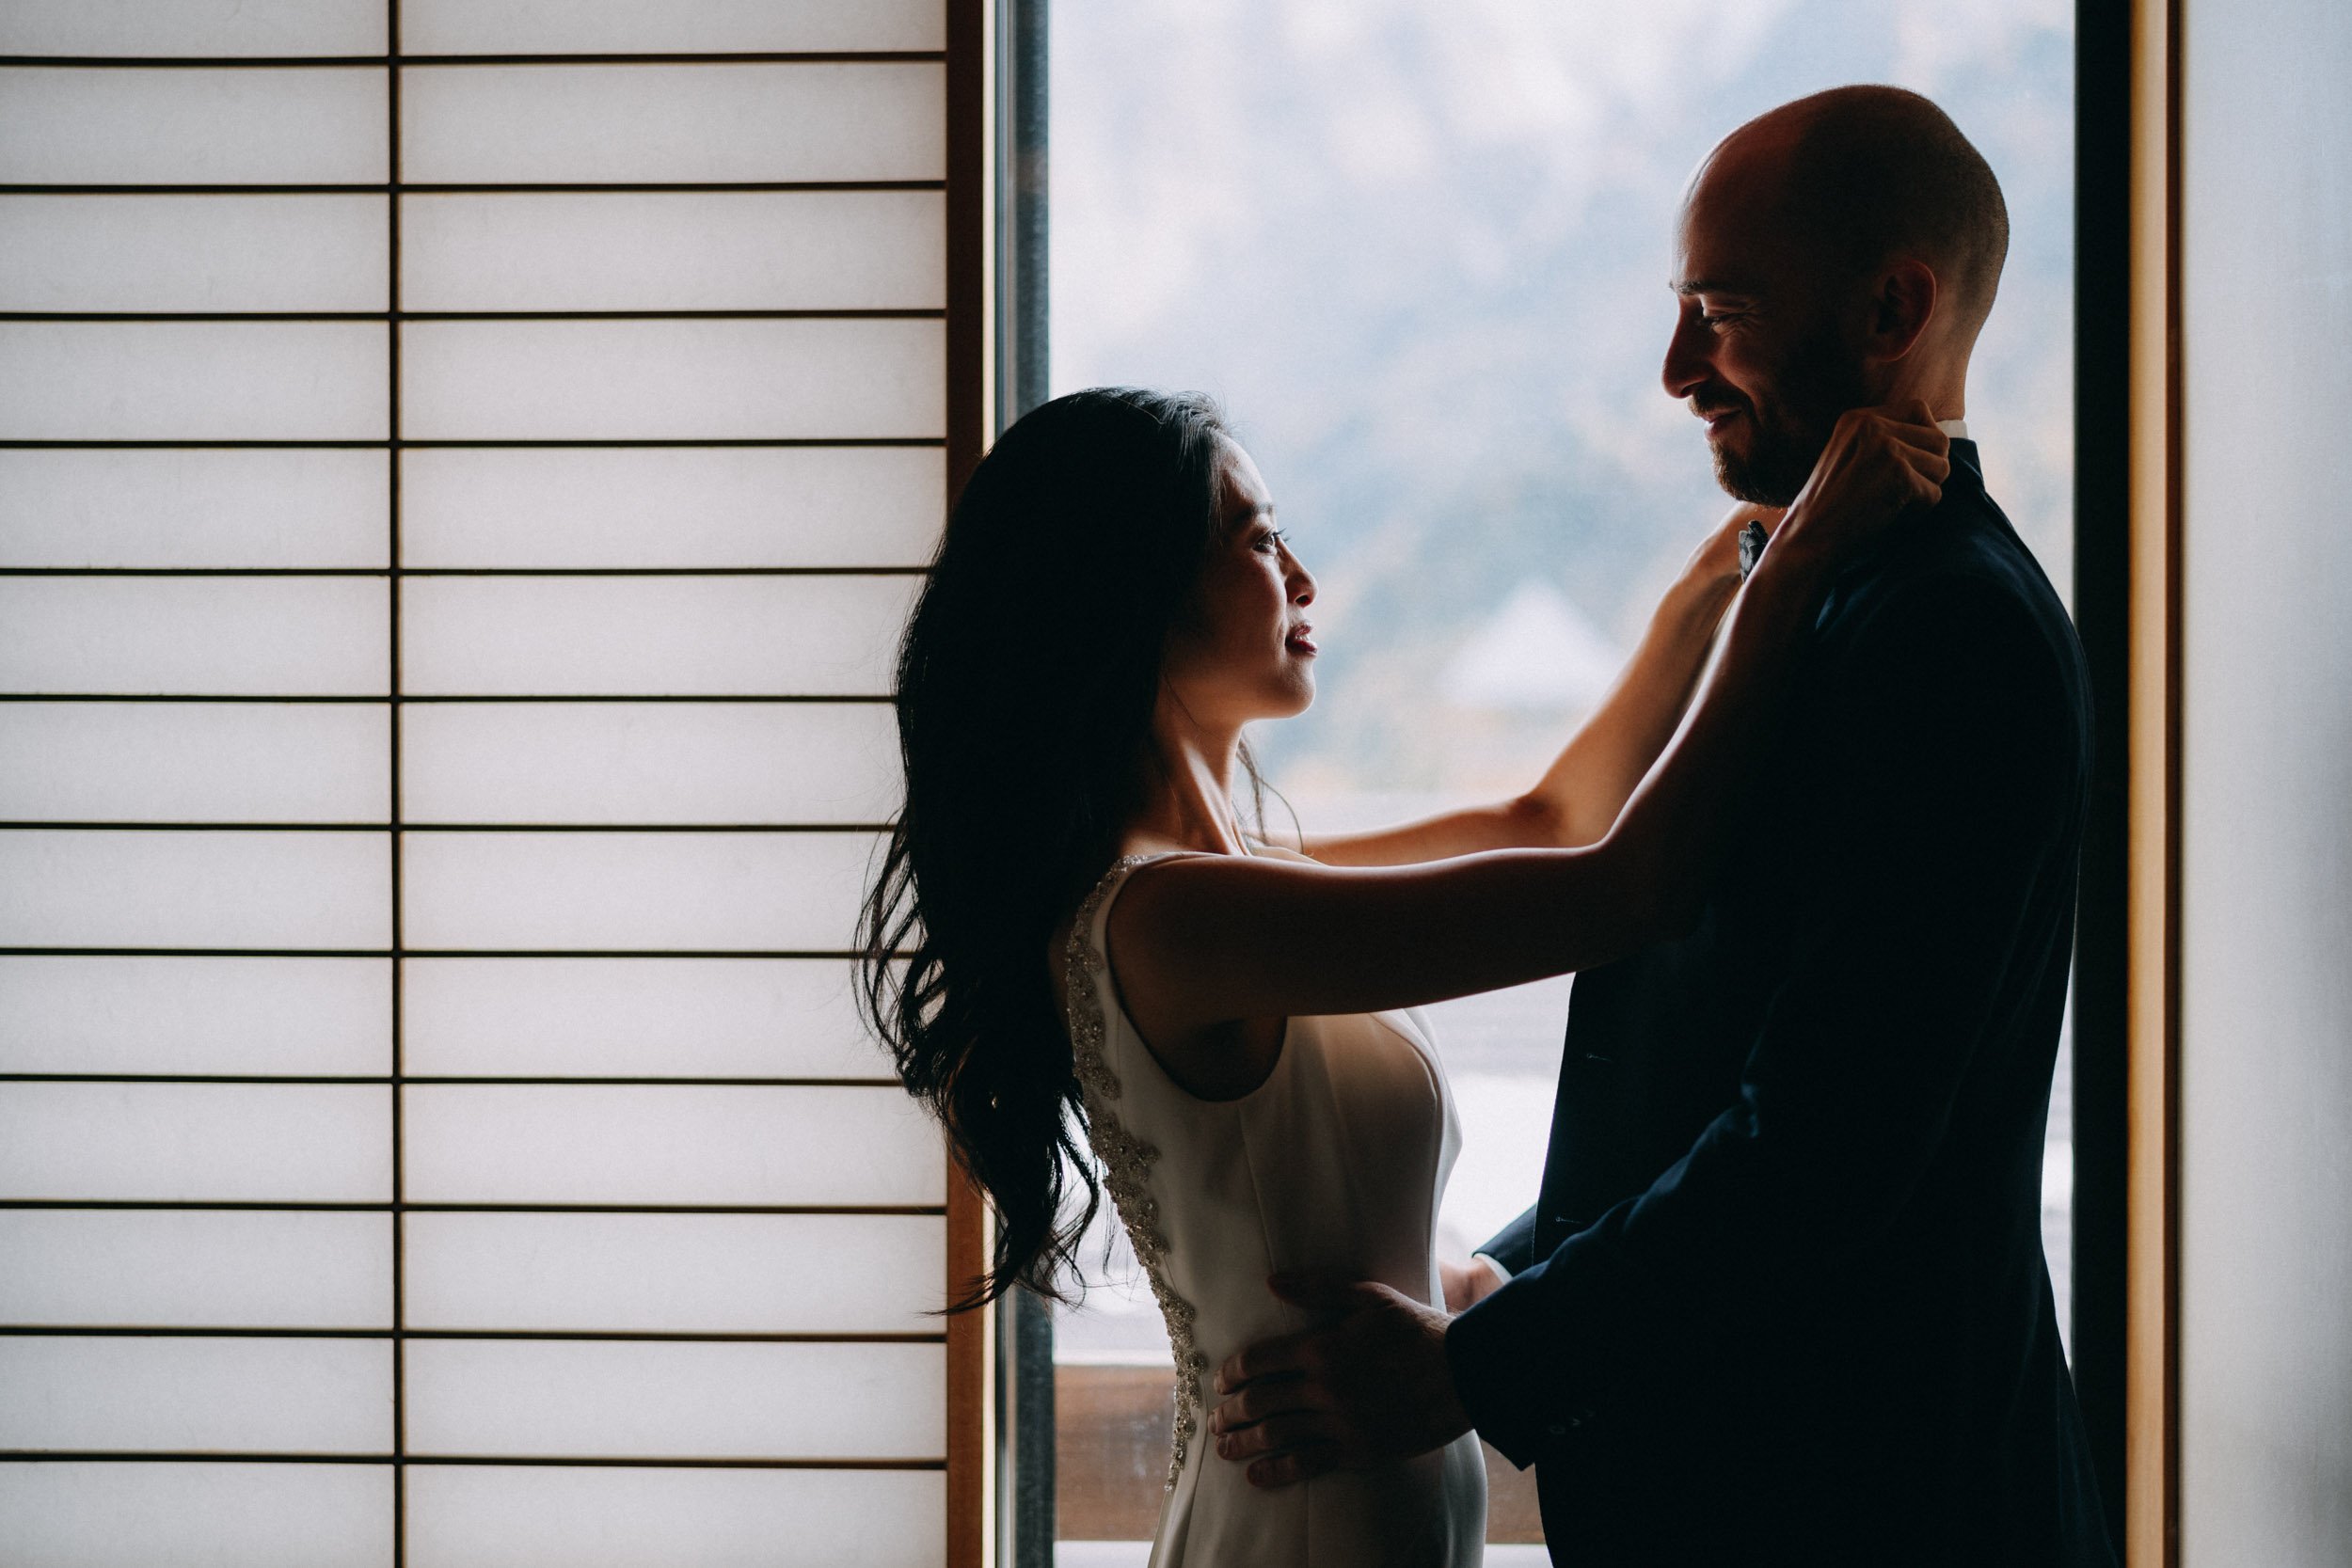 Japan Elopement &amp; Wedding Photographer